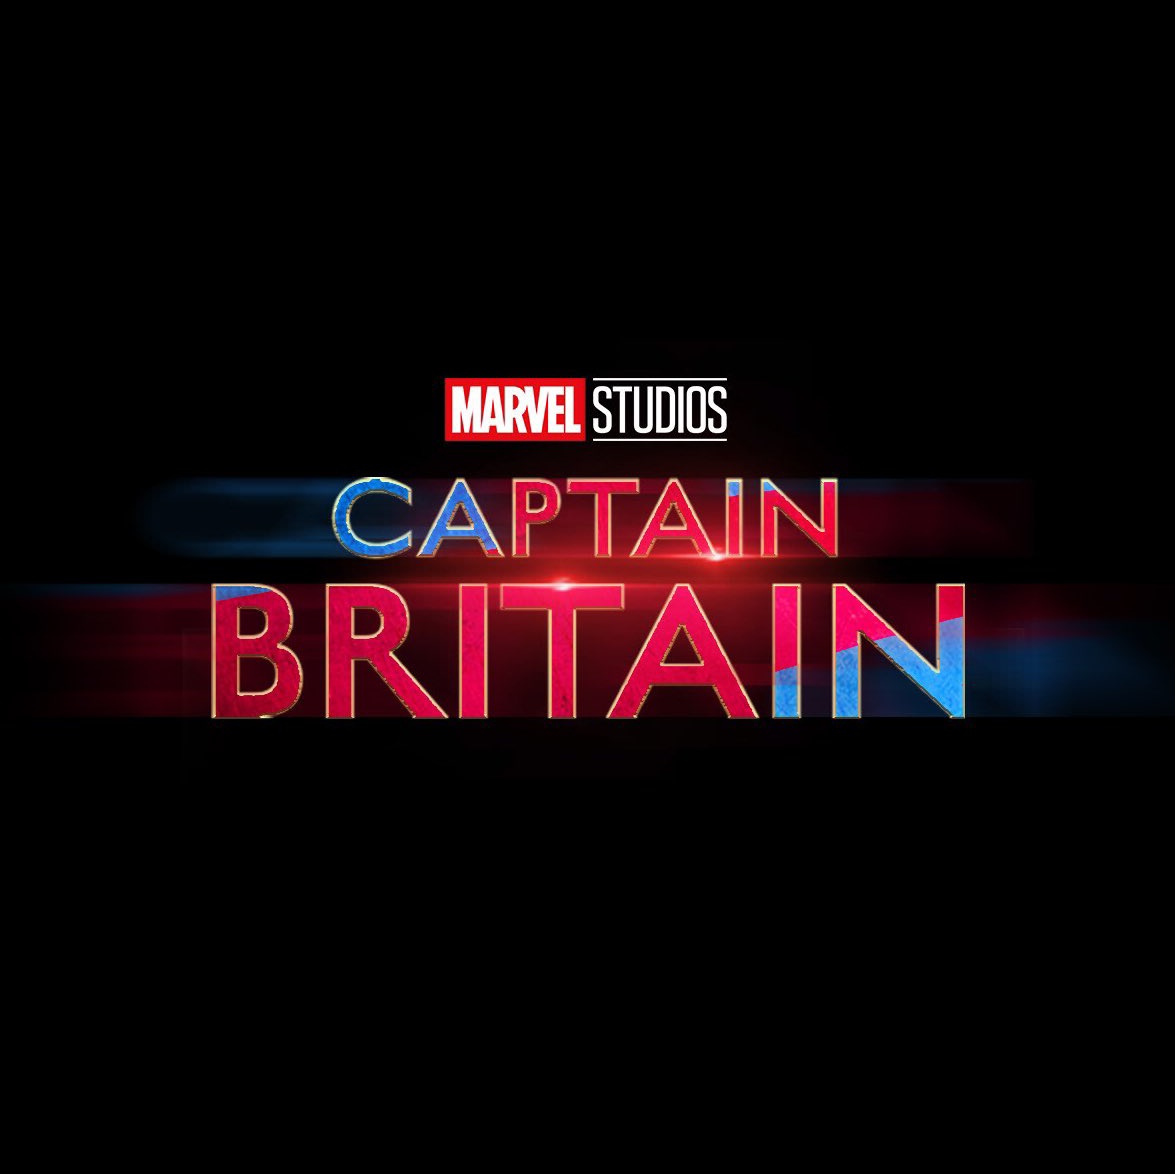 Marvel Studios has a show with Captain Britain in development. (via: @MyTimeToShineH)